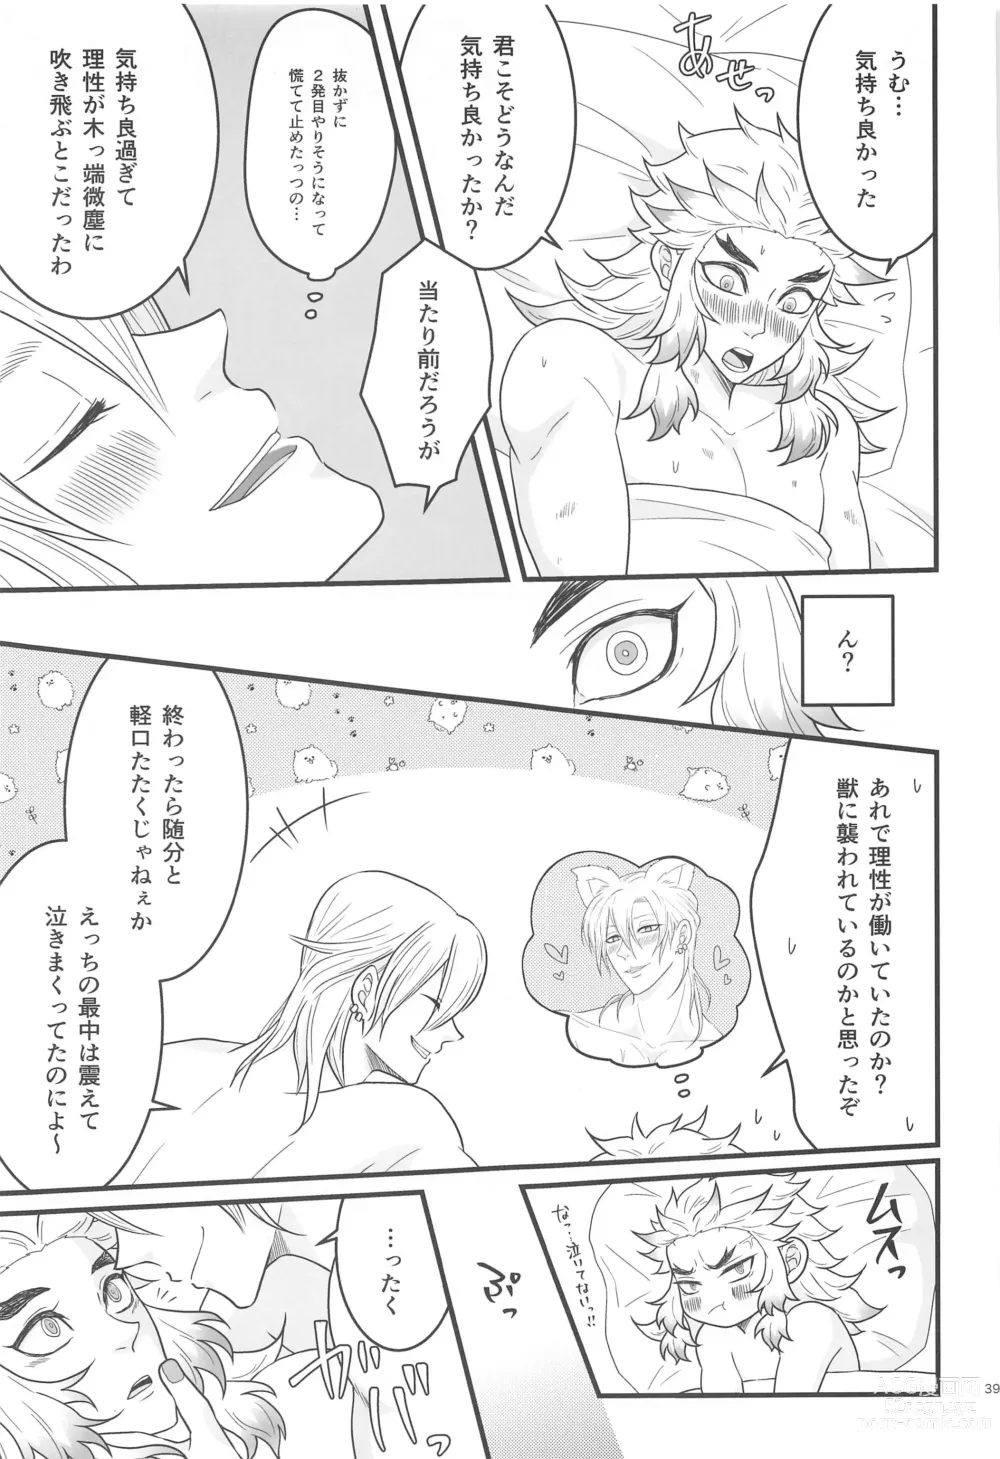 Page 38 of doujinshi Flamboyant Darling